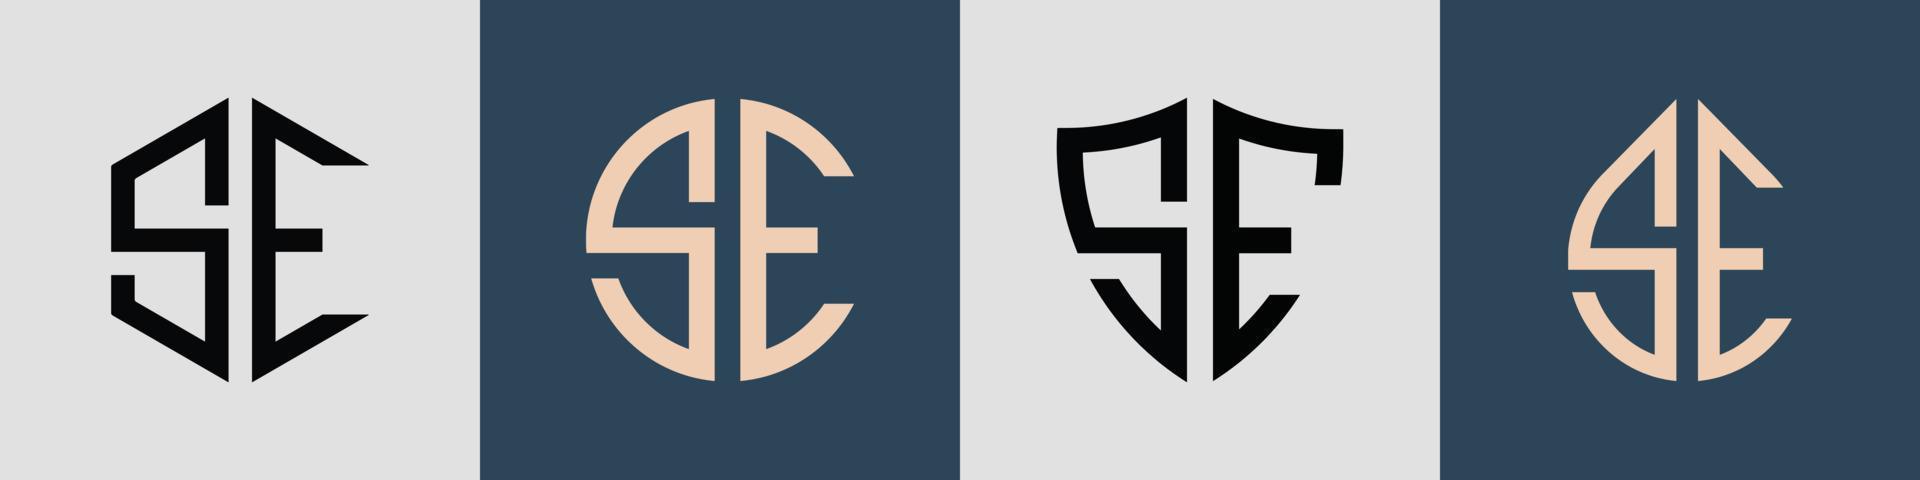 Creative simple Initial Letters SE Logo Designs Bundle. vector